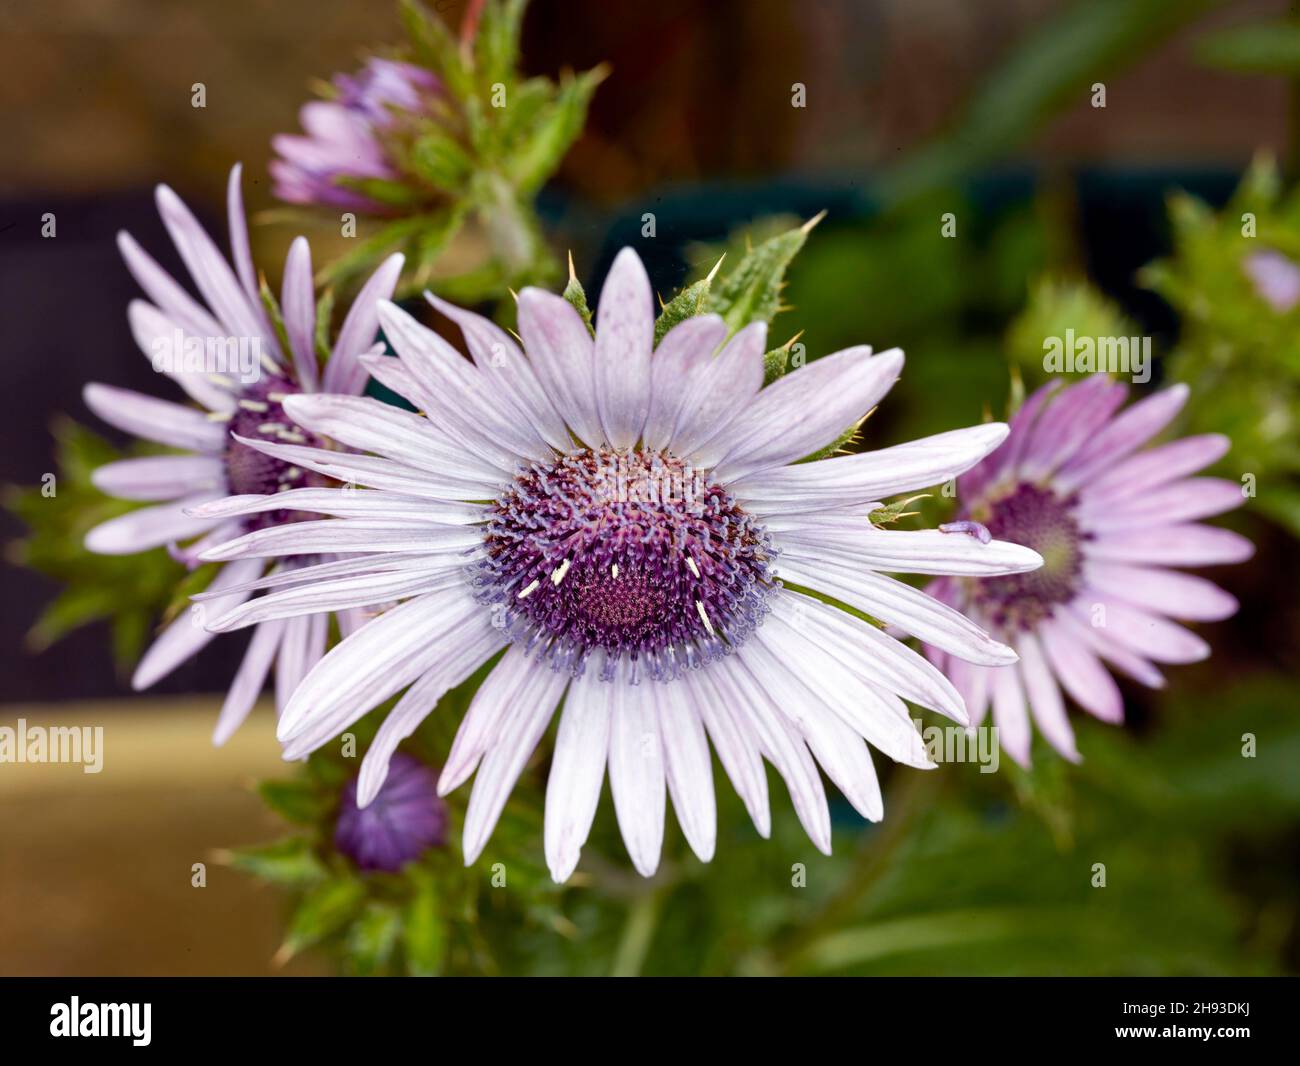 Lovely Berkheya Purpurea – Zulu Warrior,daisy-like flowers. Natural close-up flower portrait Stock Photo